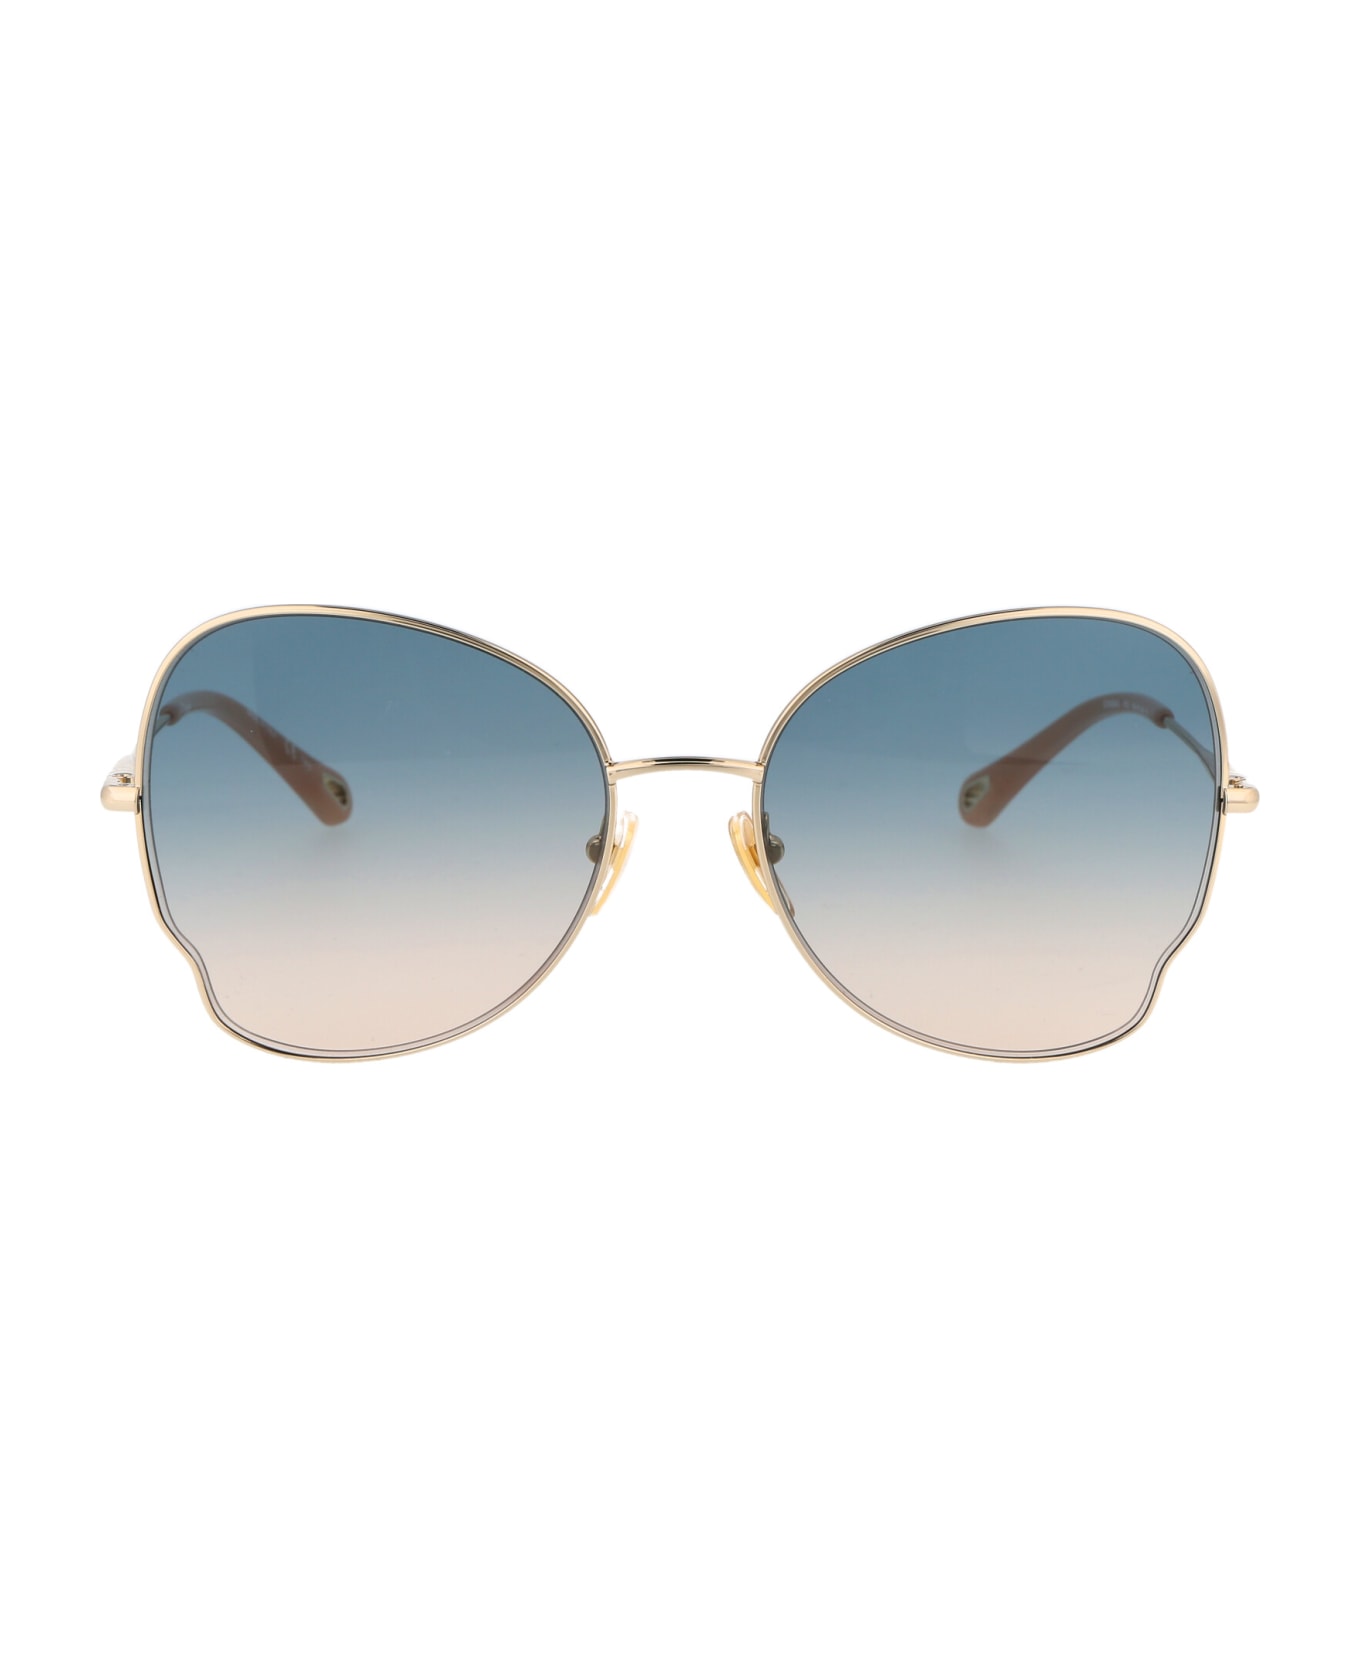 Chloé Eyewear Ch0094s Sunglasses - 003 GOLD GOLD GREEN